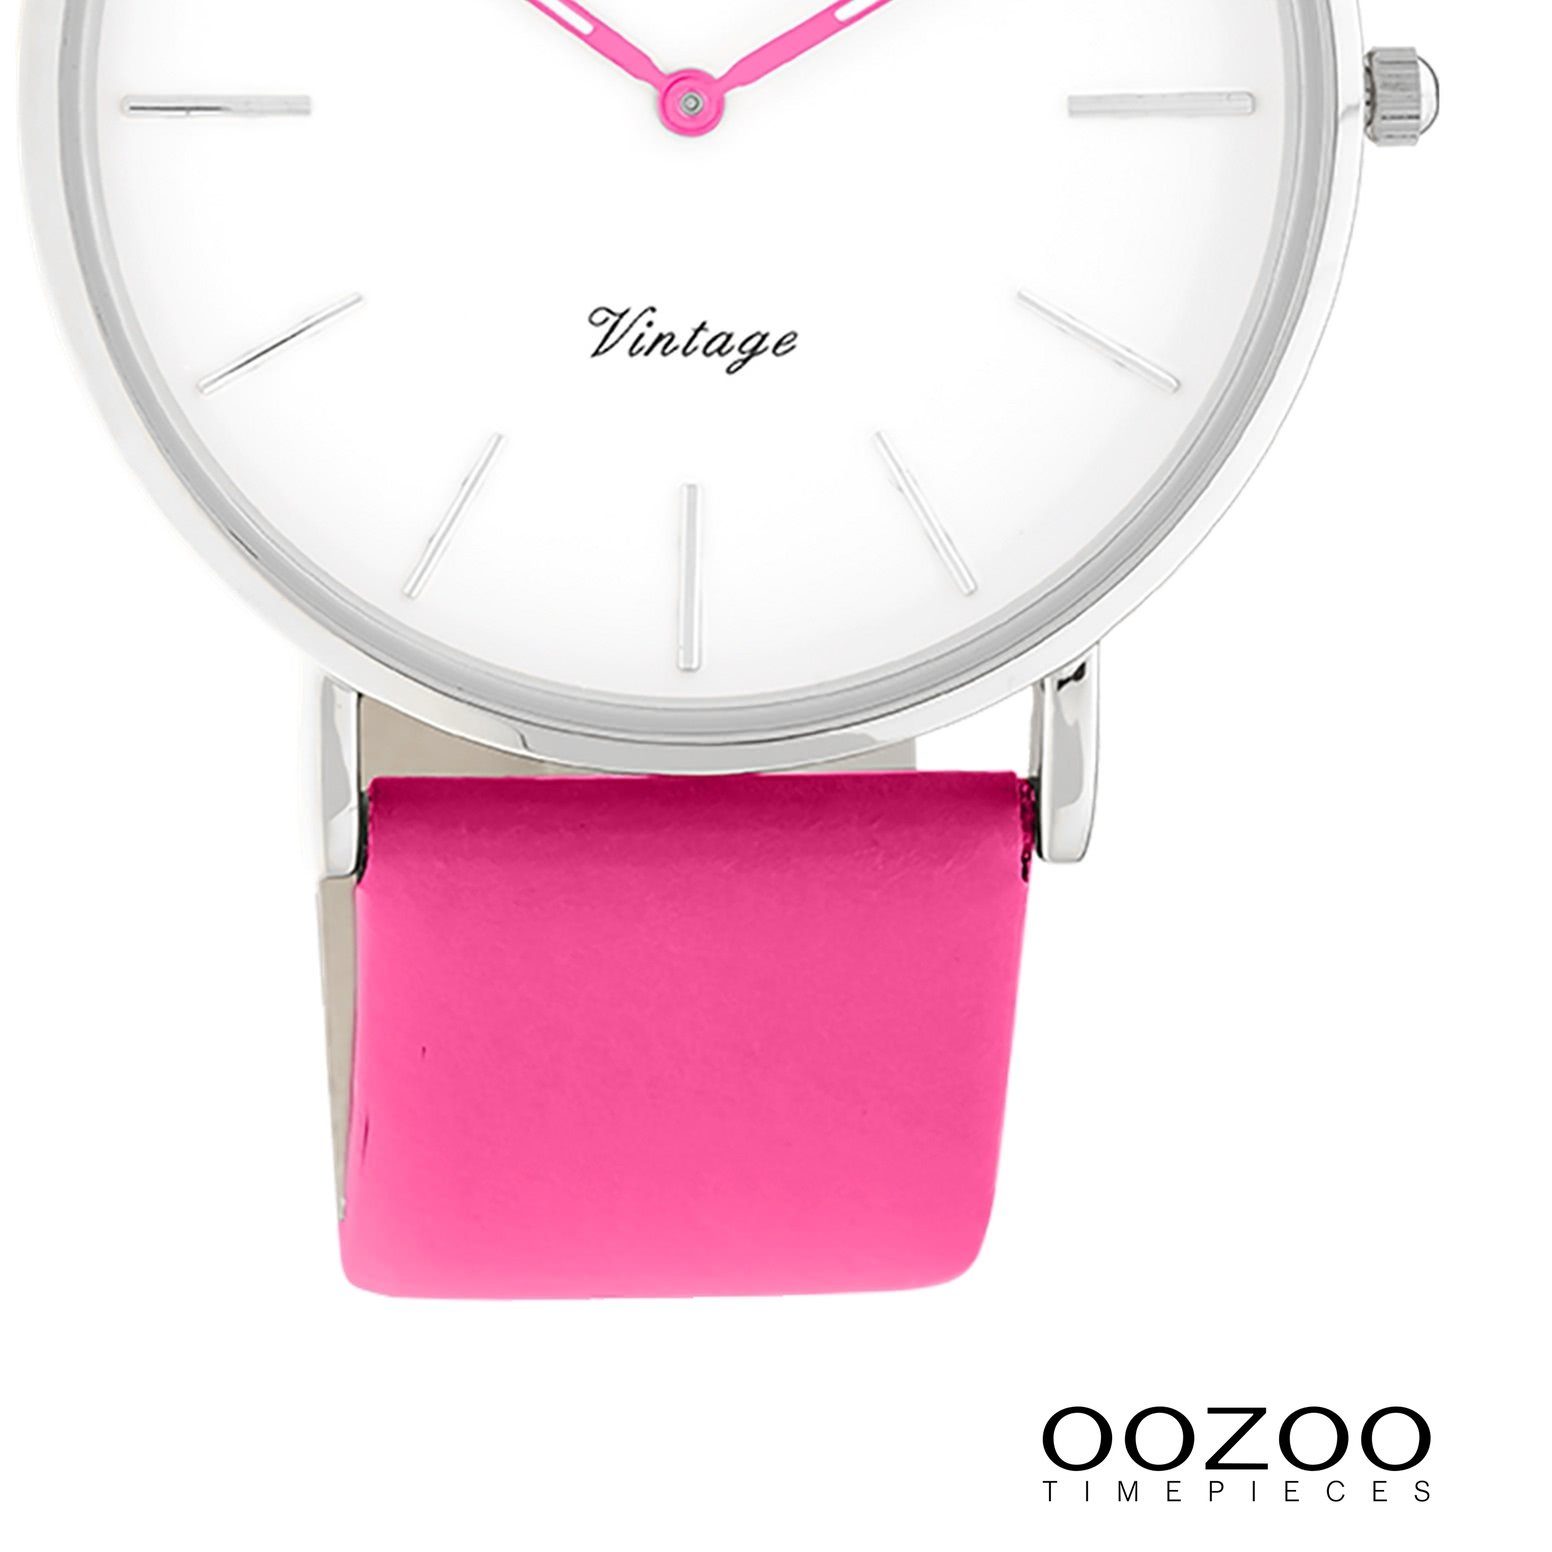 Lederarmband, Oozoo Fashion-Style Armbanduhr Vintage OOZOO Quarzuhr Series, (ca. groß Damenuhr 40mm) Damen rund,